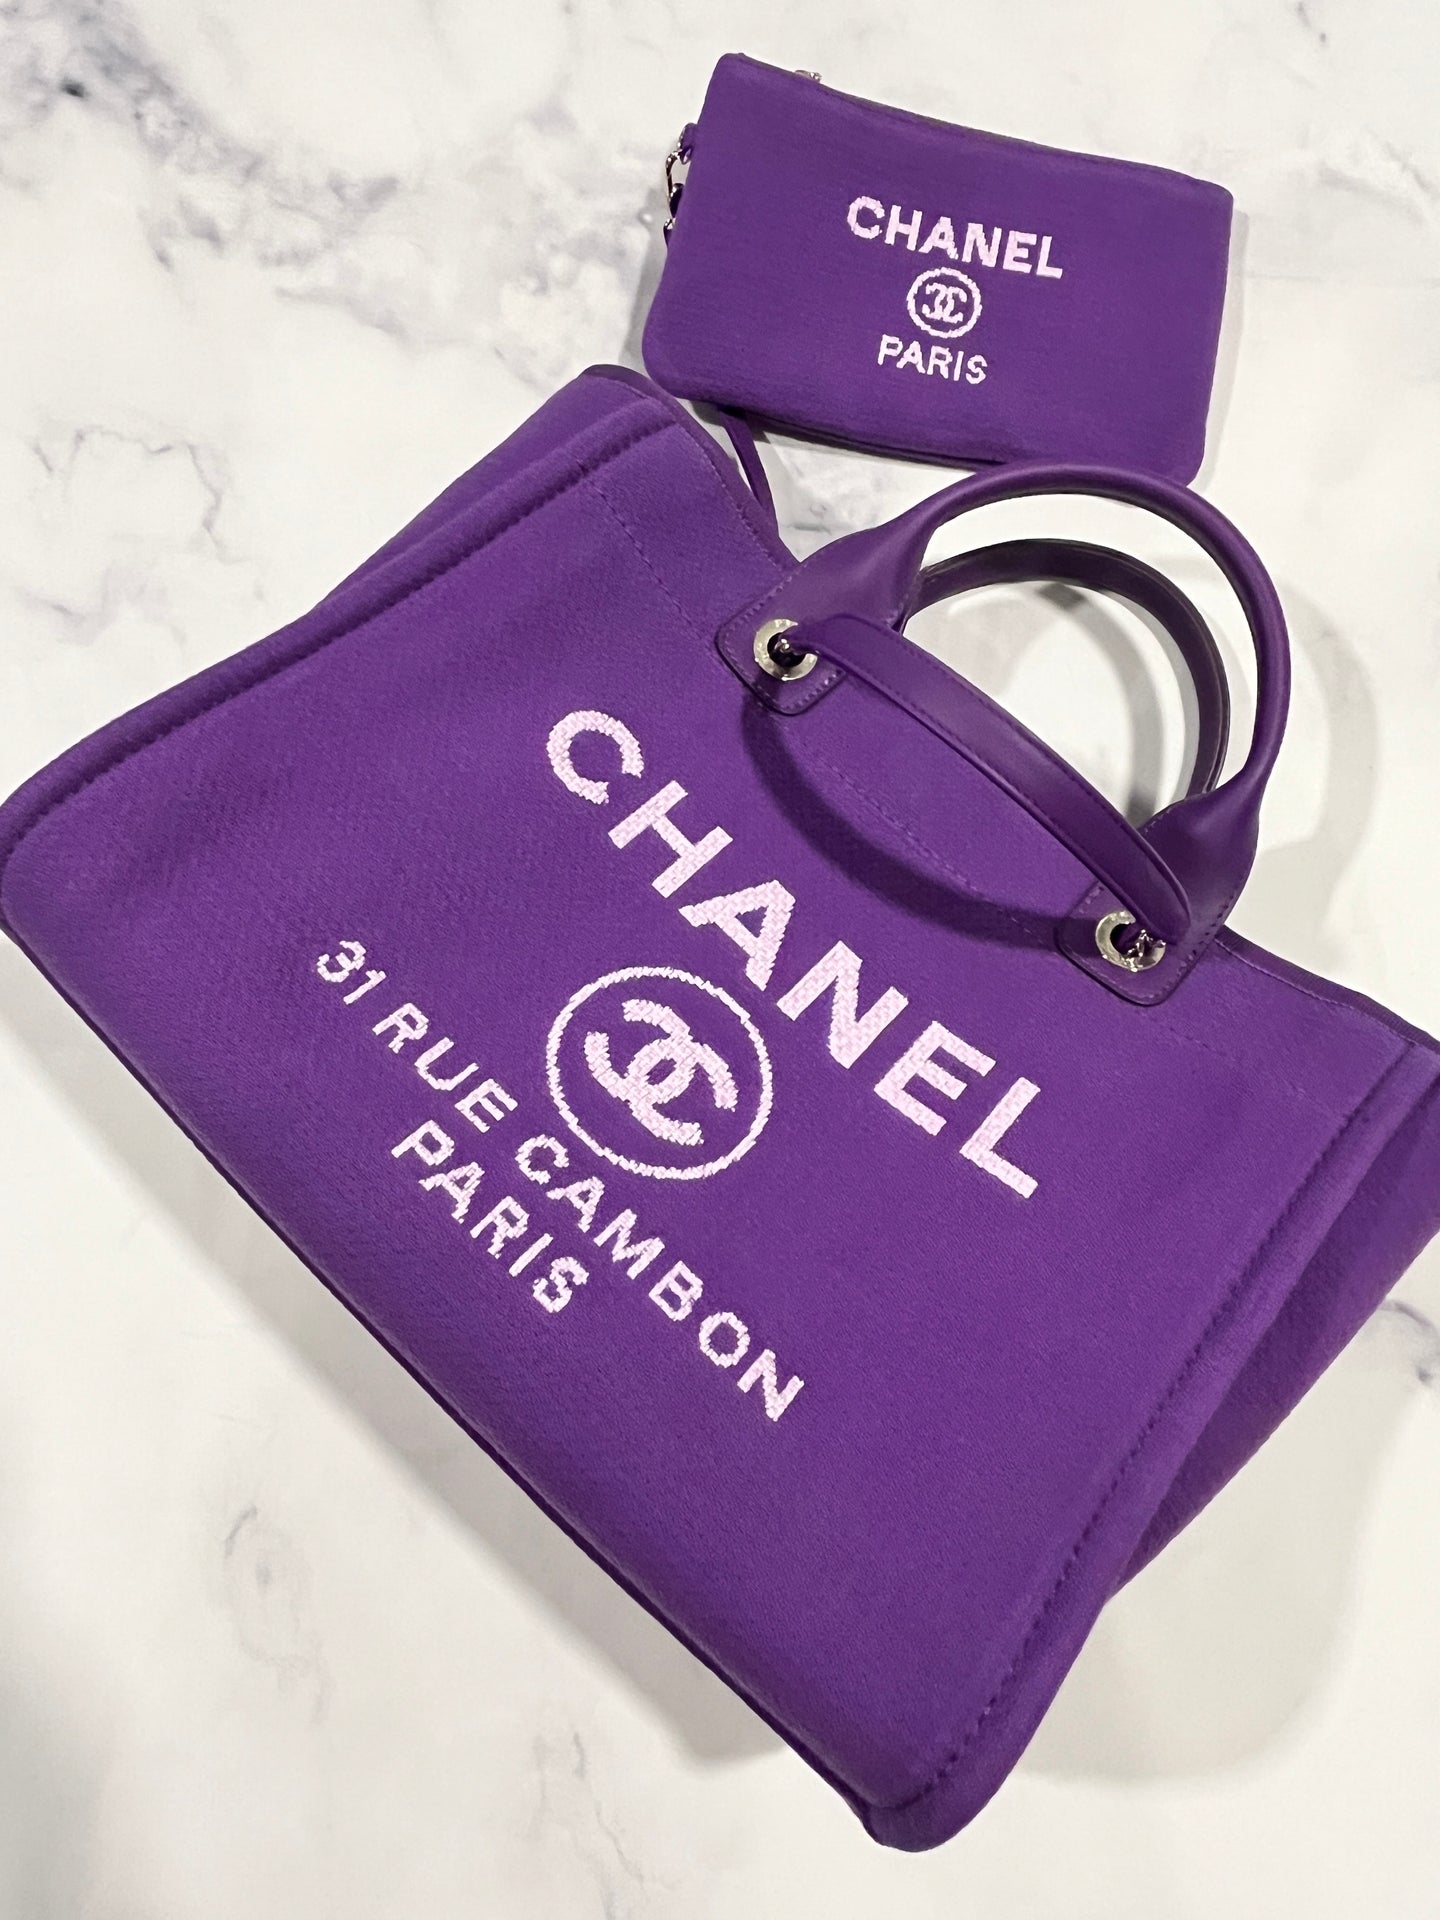 Chanel Purple Large Deauville Tote Handbag